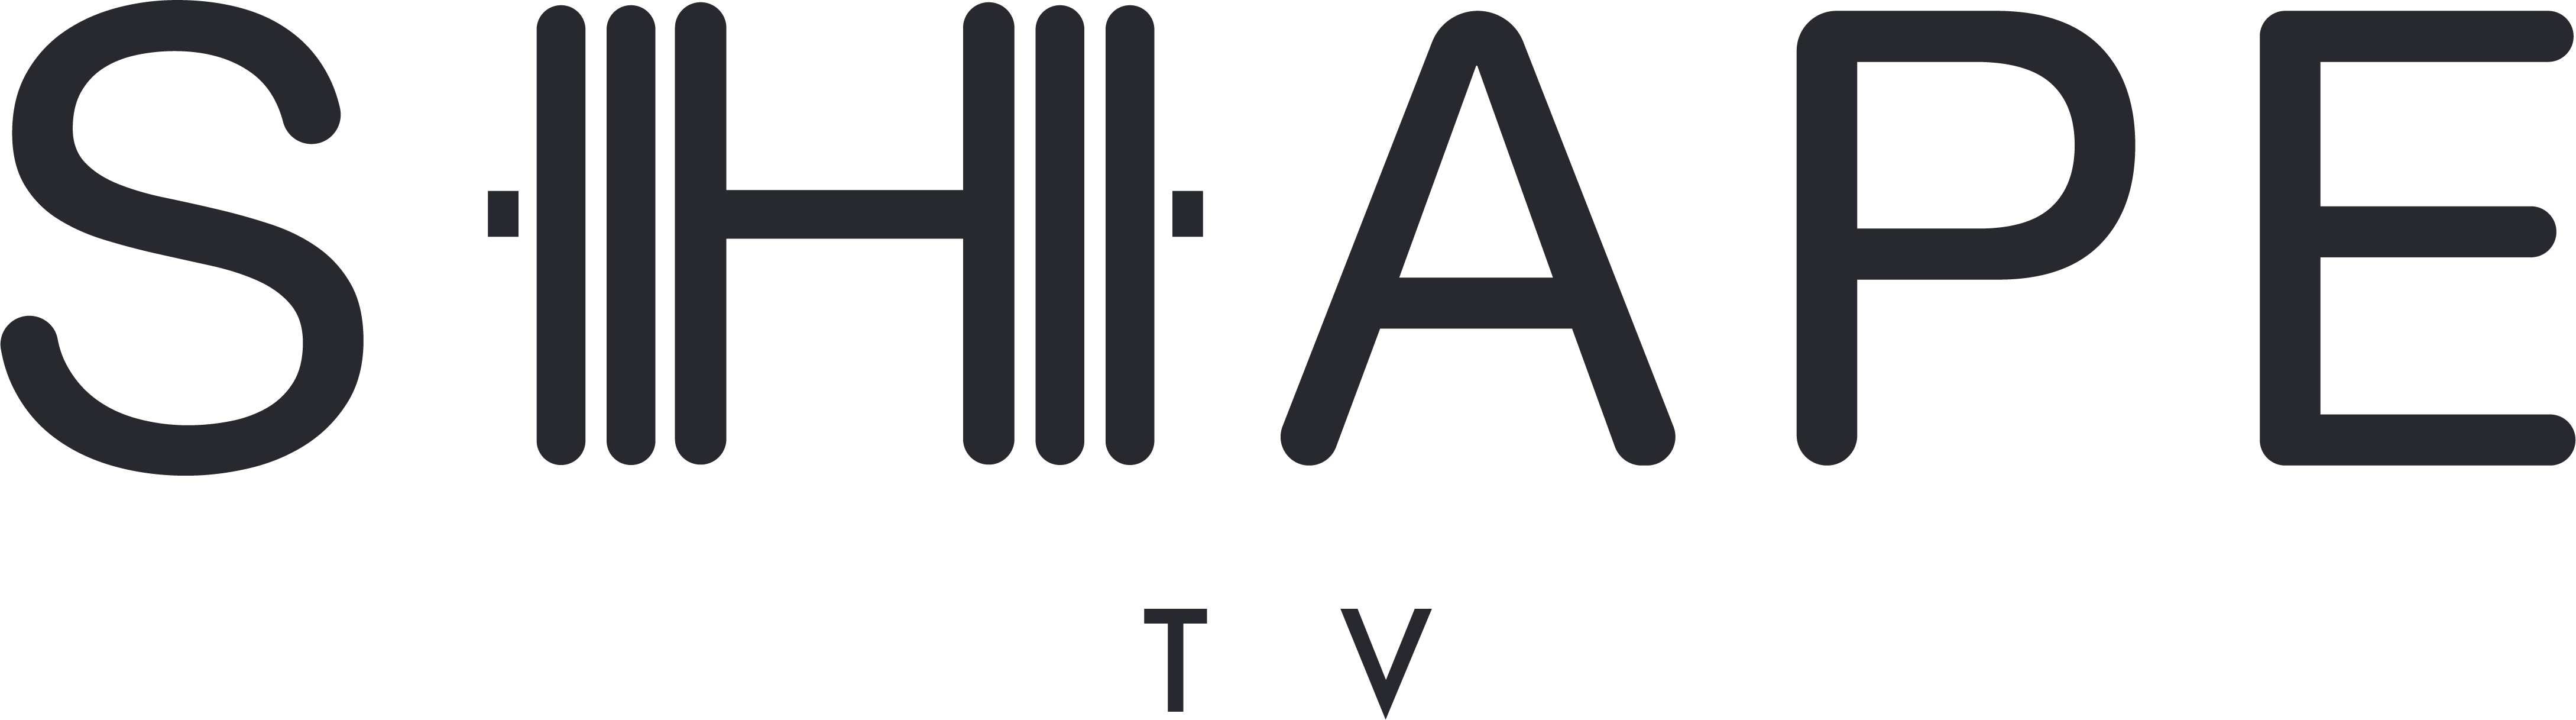 SHAPE TV official logo-02